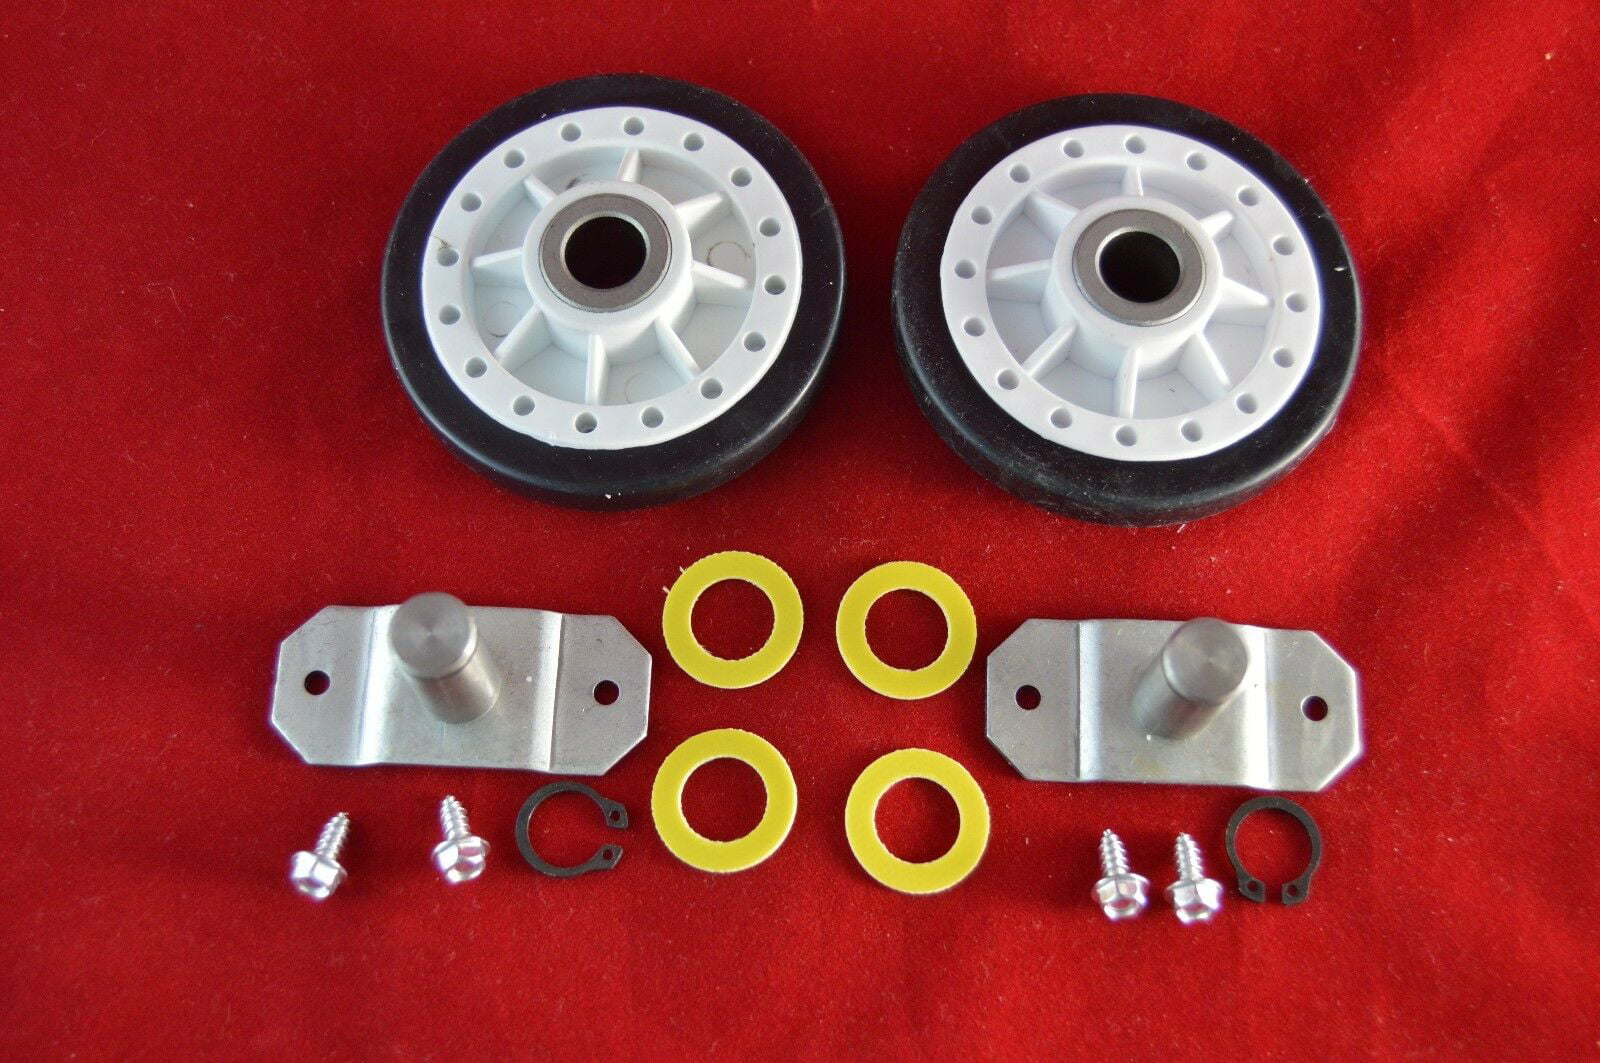 SALA-1008 AP4242491 PS2162268 Rear Dryer Roller Kit for Whirlpool 